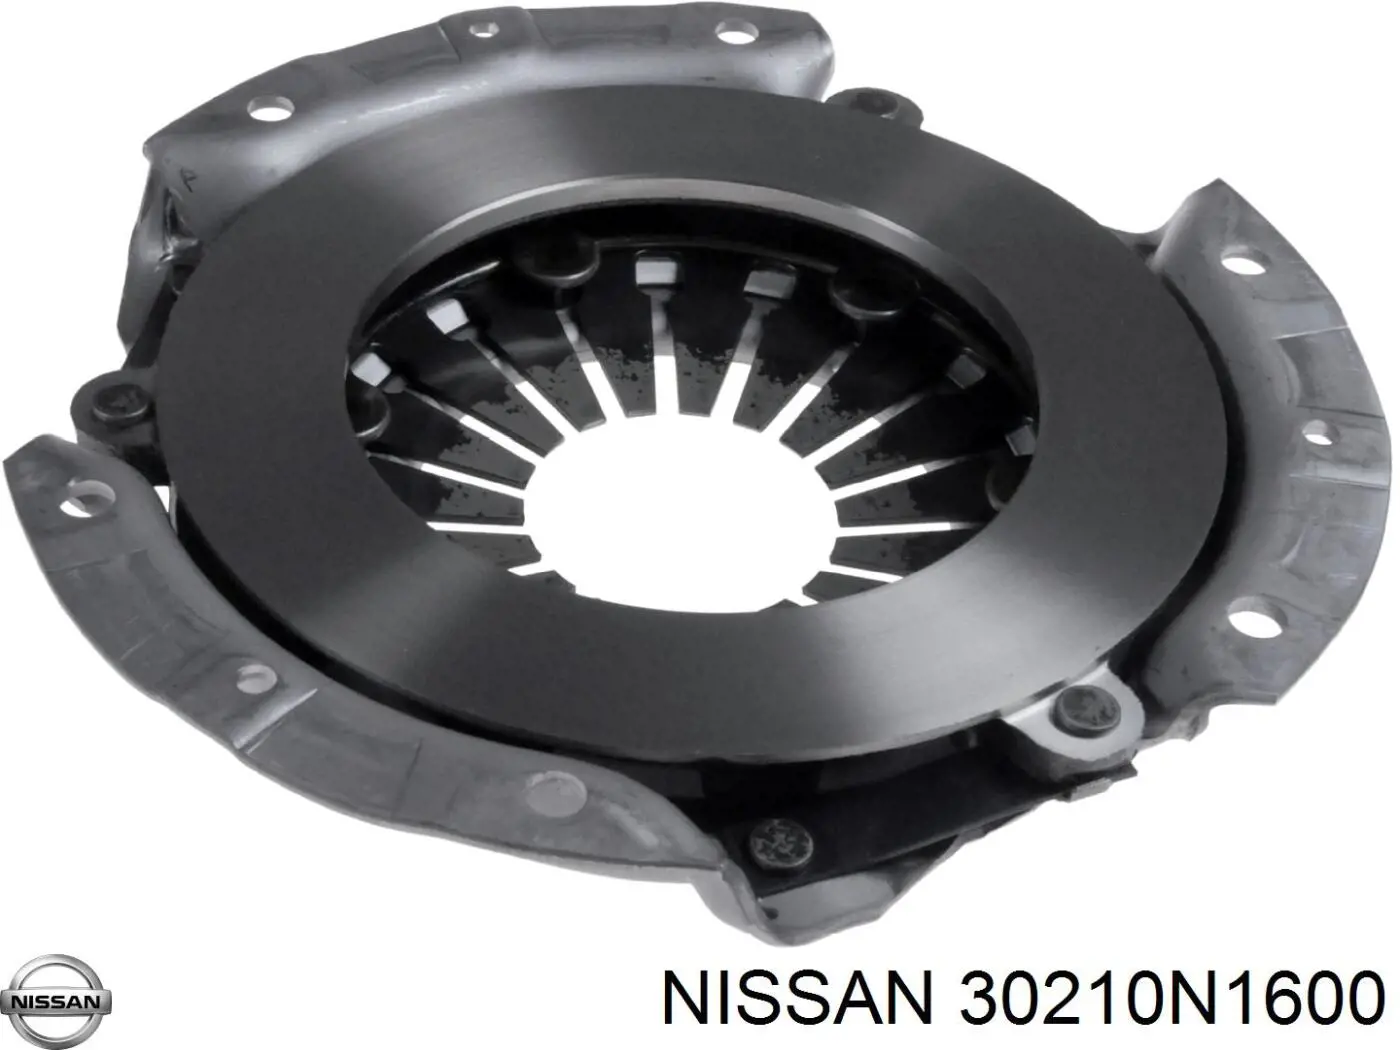 30210N1600 Nissan plato de presión de embrague